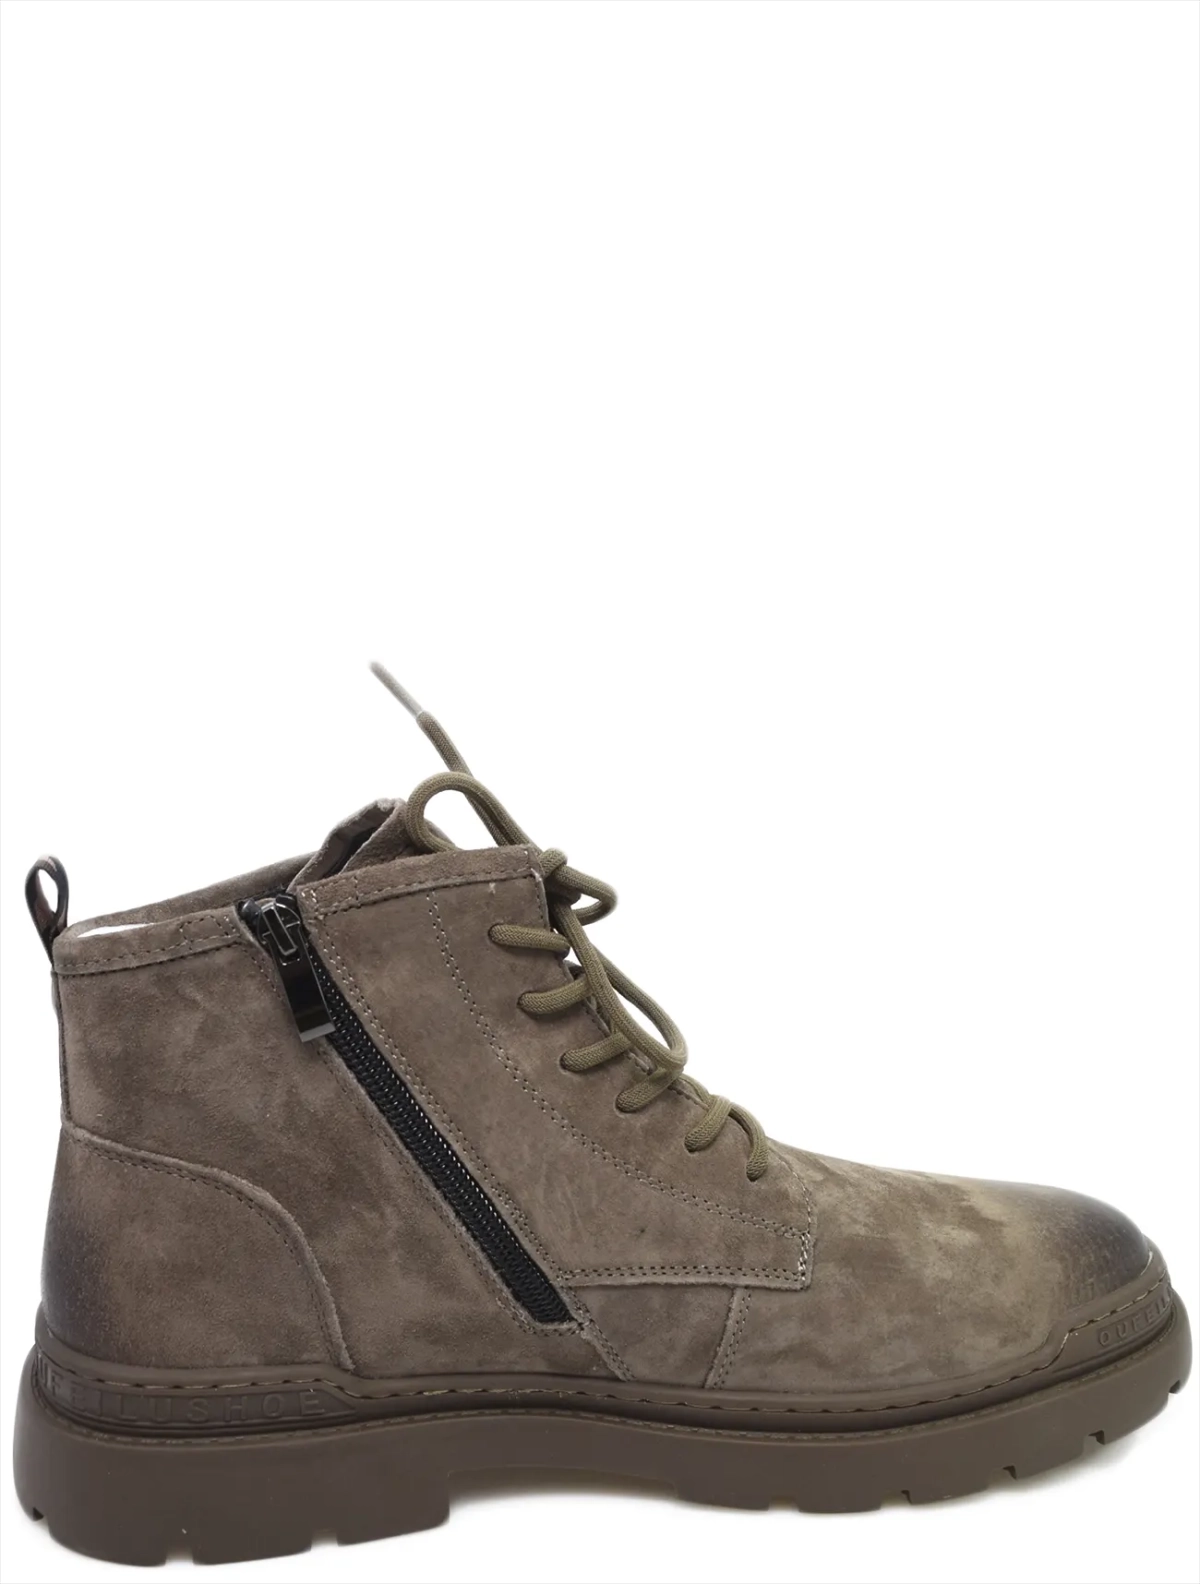 ESCAN ES840065-6 мужские ботинки